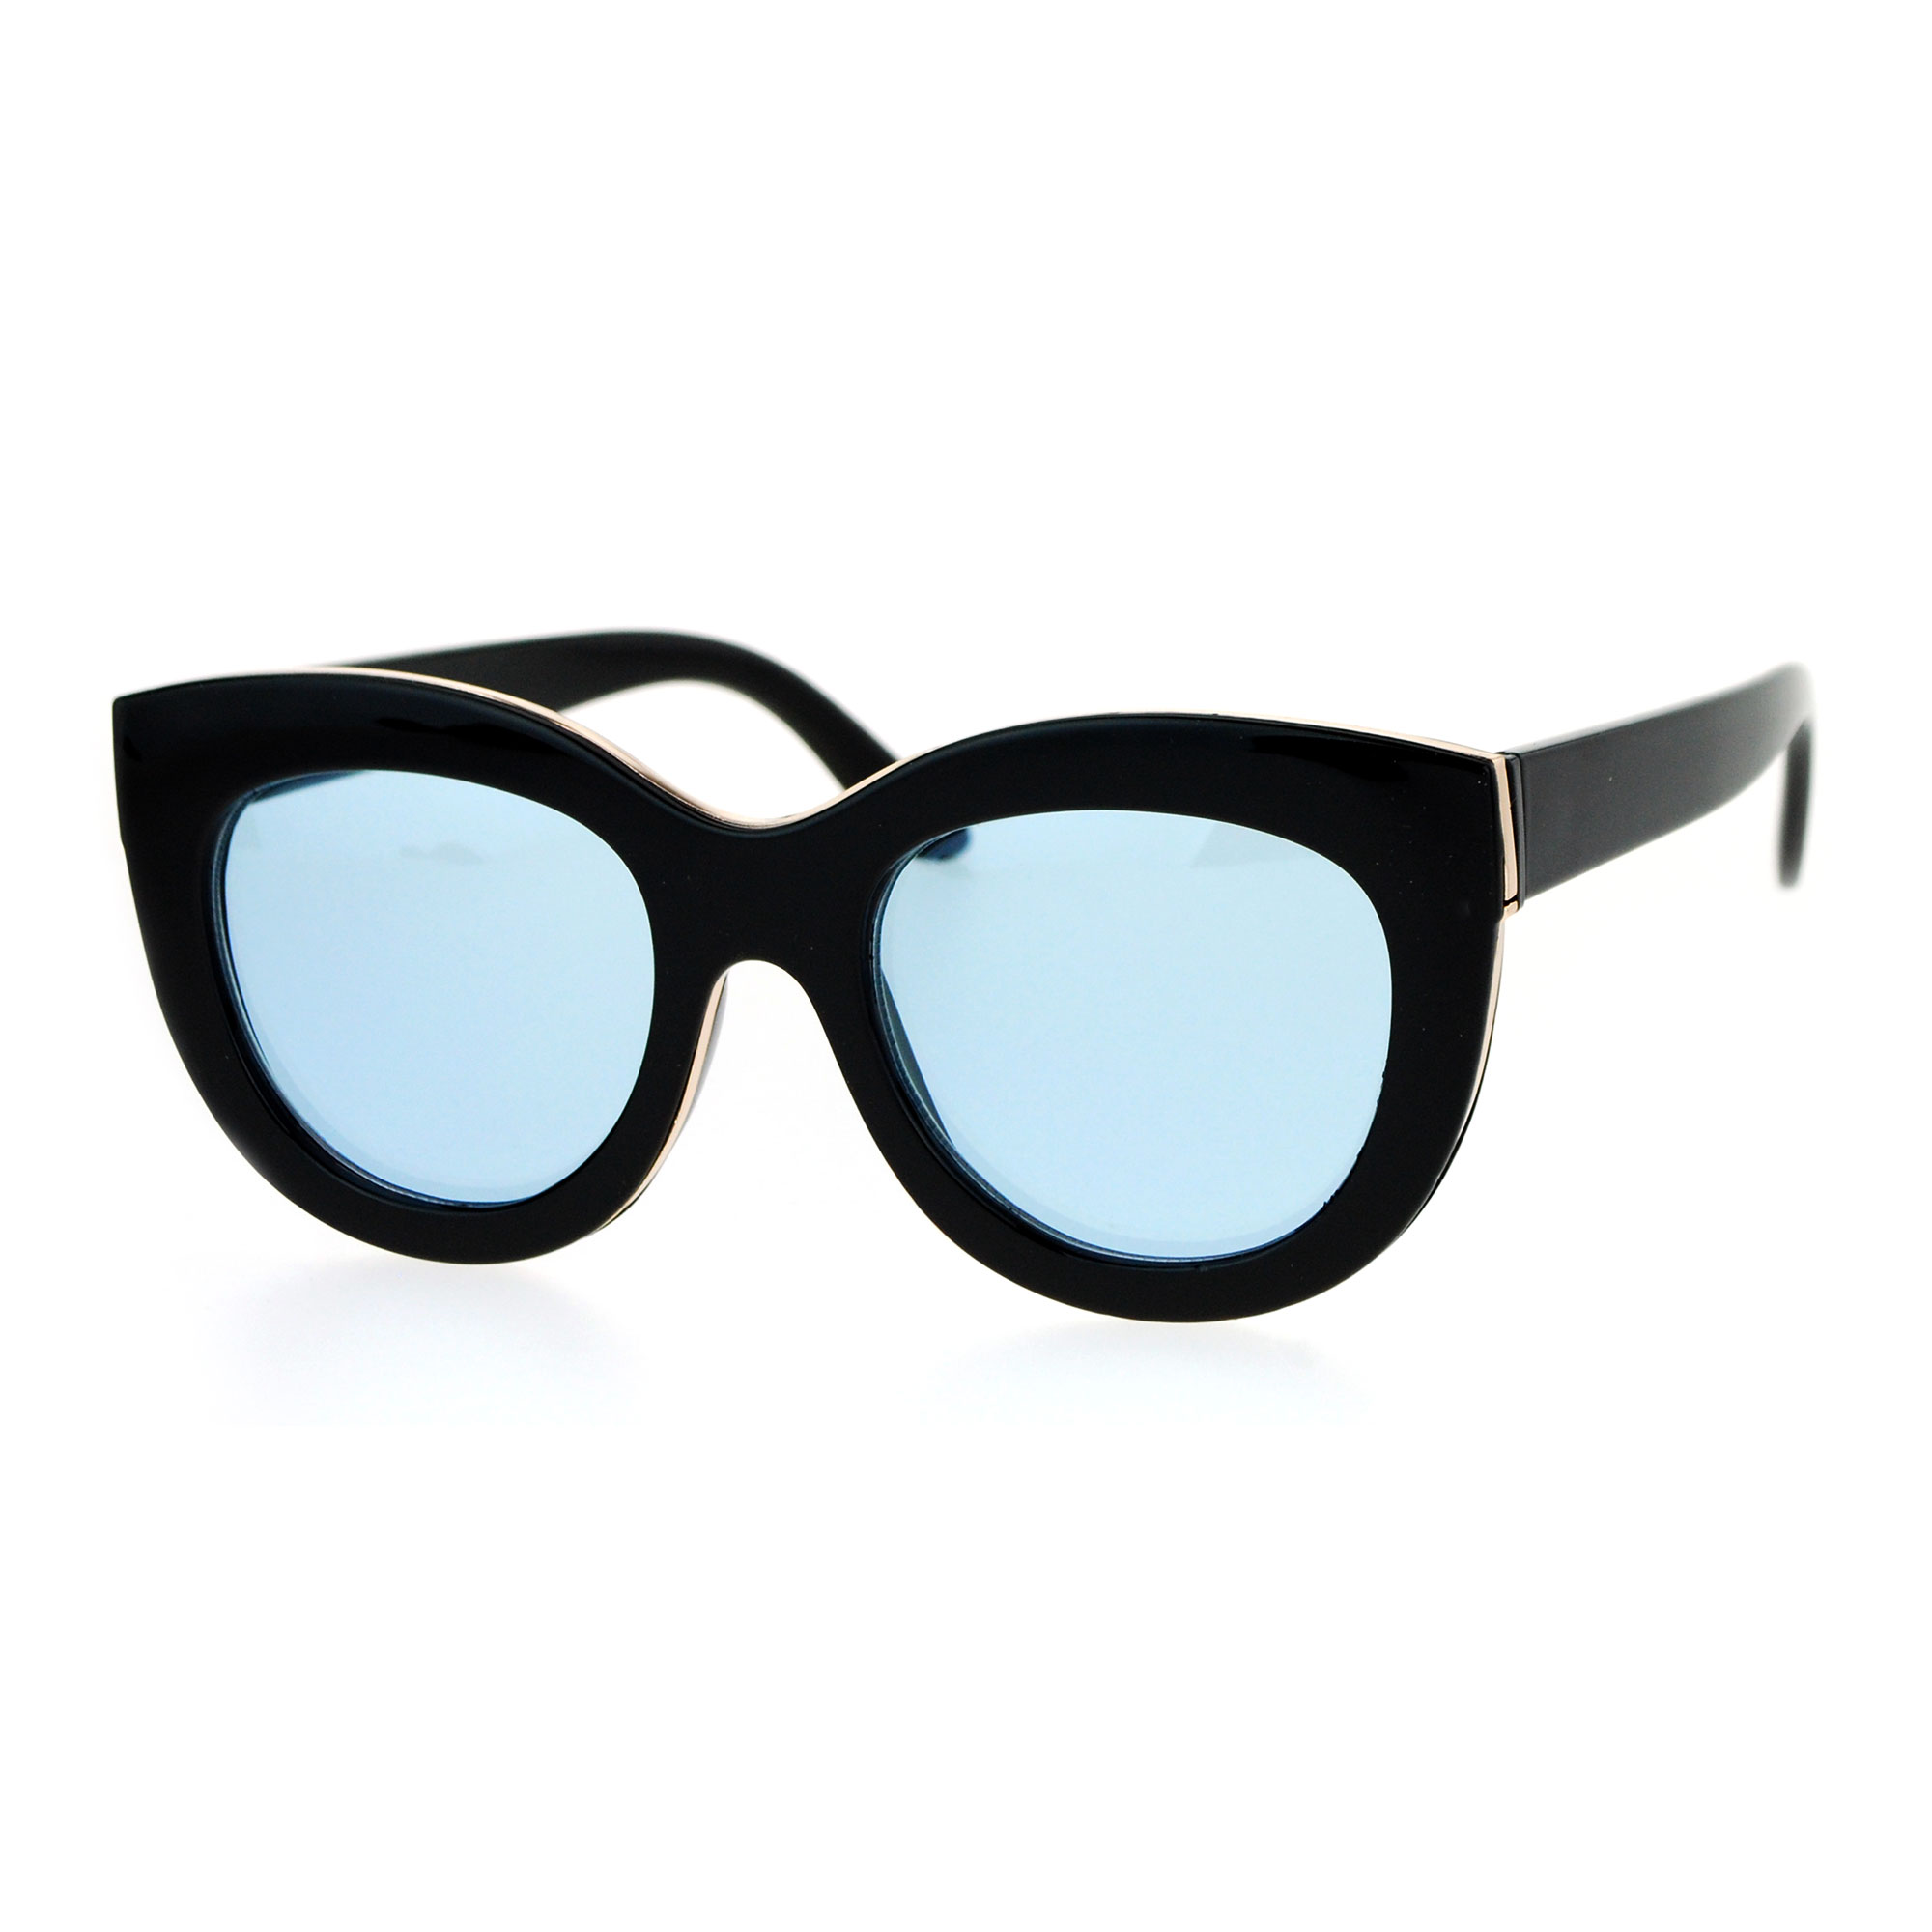 SA106 Diva Thick Plastic Oversize Cat Eye Womens Sunglasses Black Blue - image 2 of 3